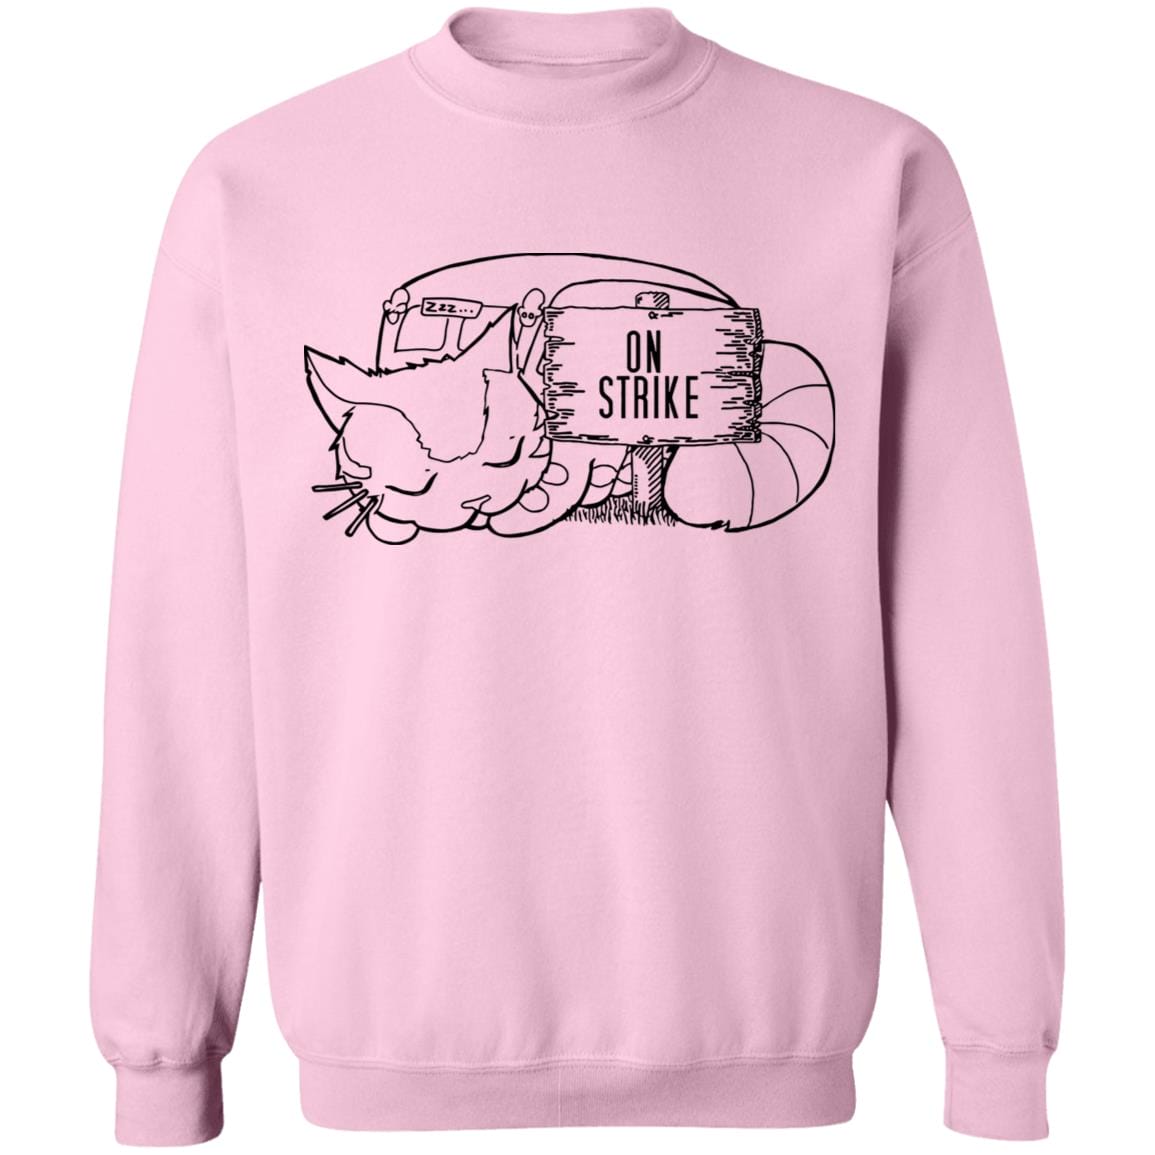 My Neighbor Totoro – CatBus on strike Sweatshirt